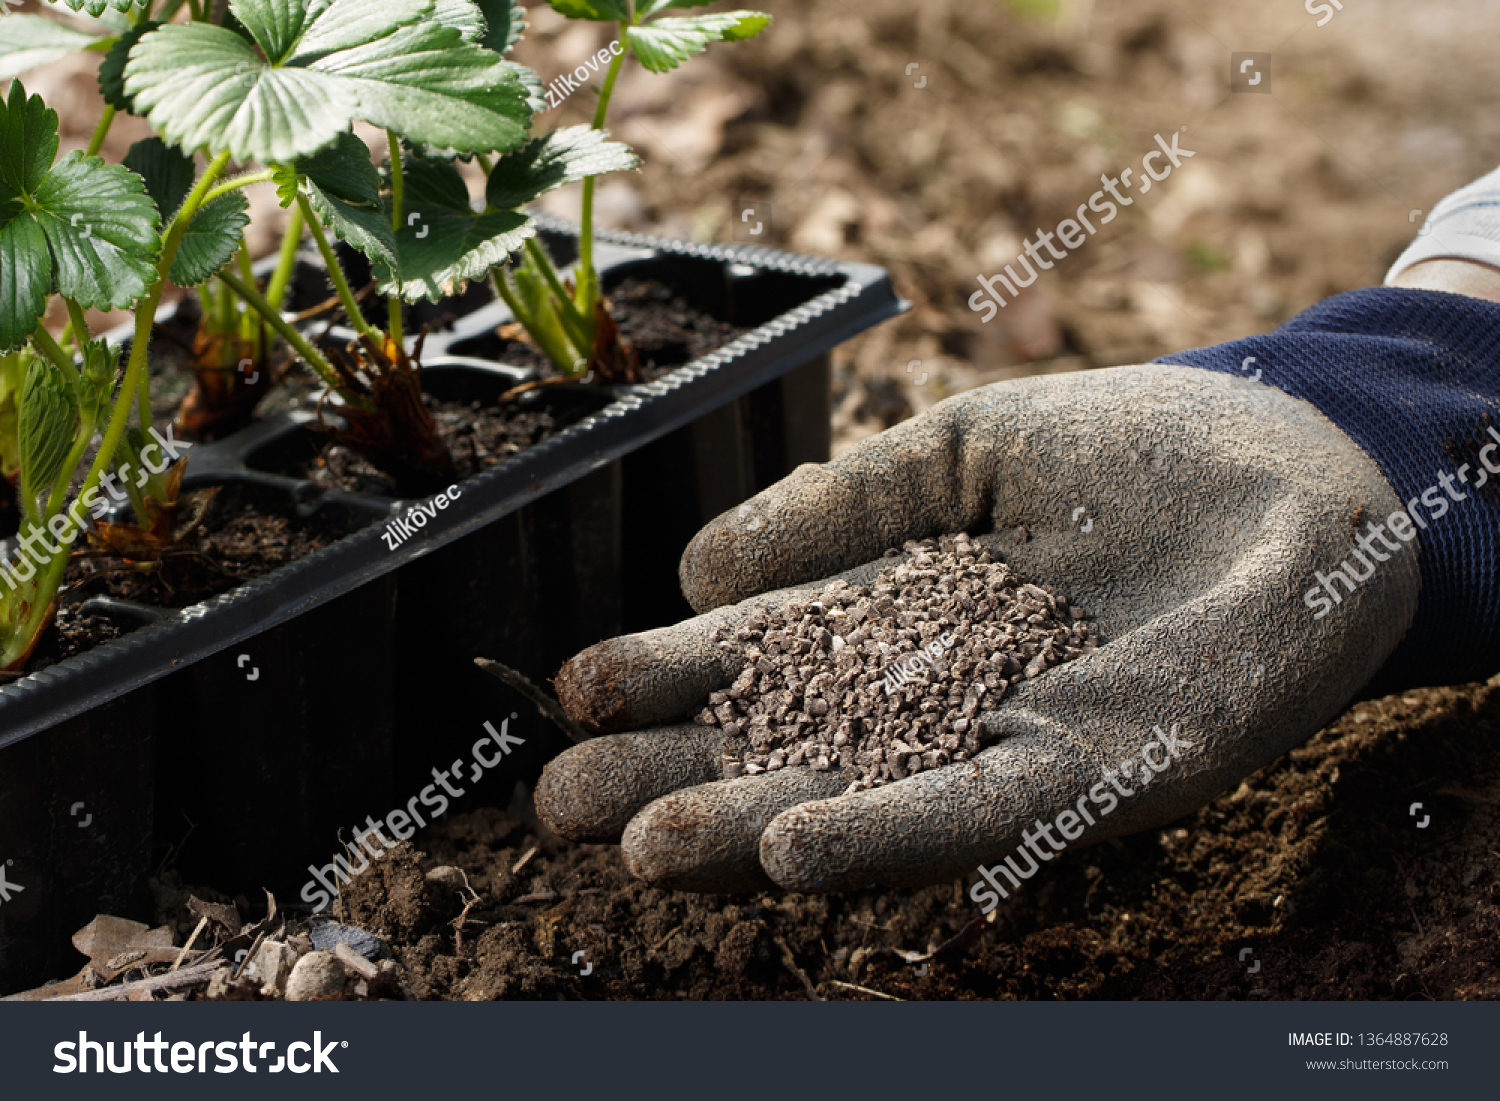 Gardener blending organic fertiliser humic granules with soil, enriching soil for plants to grow optimally. Organic gardening, healthy food, nutrients, self-supply, housework concept.   #1364887628